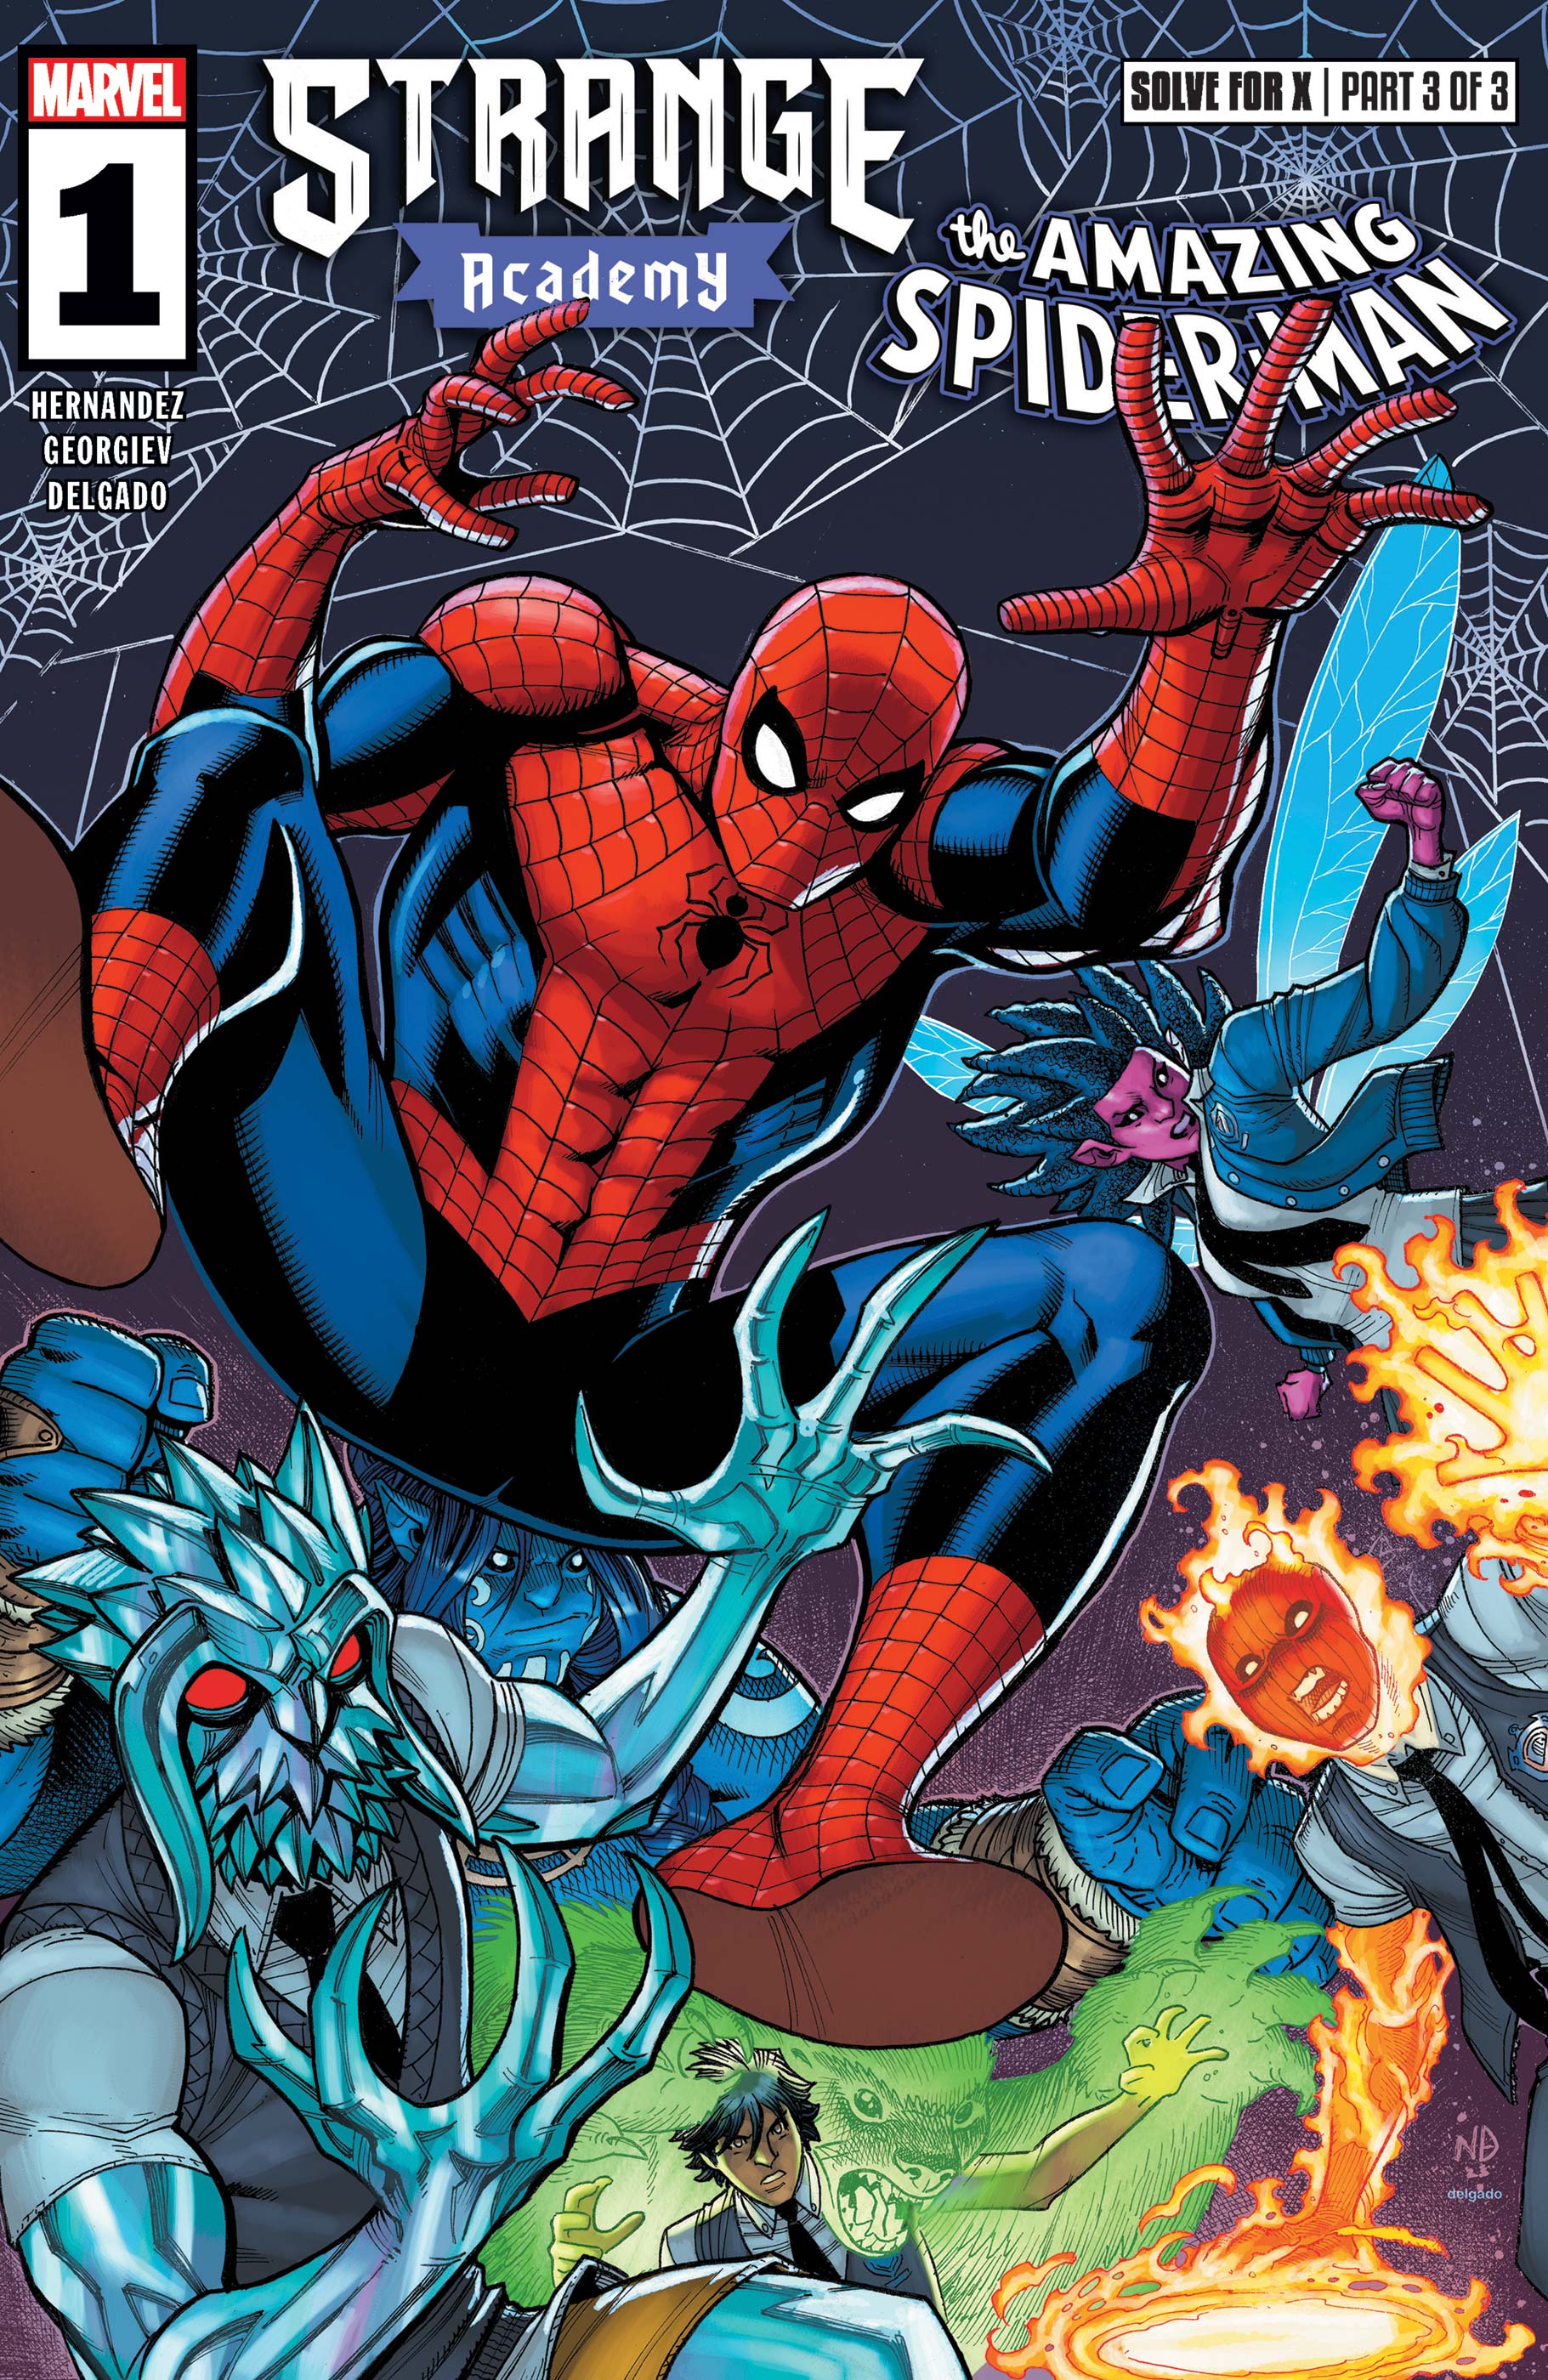 Strange Academy: Amazing Spider-Man #1